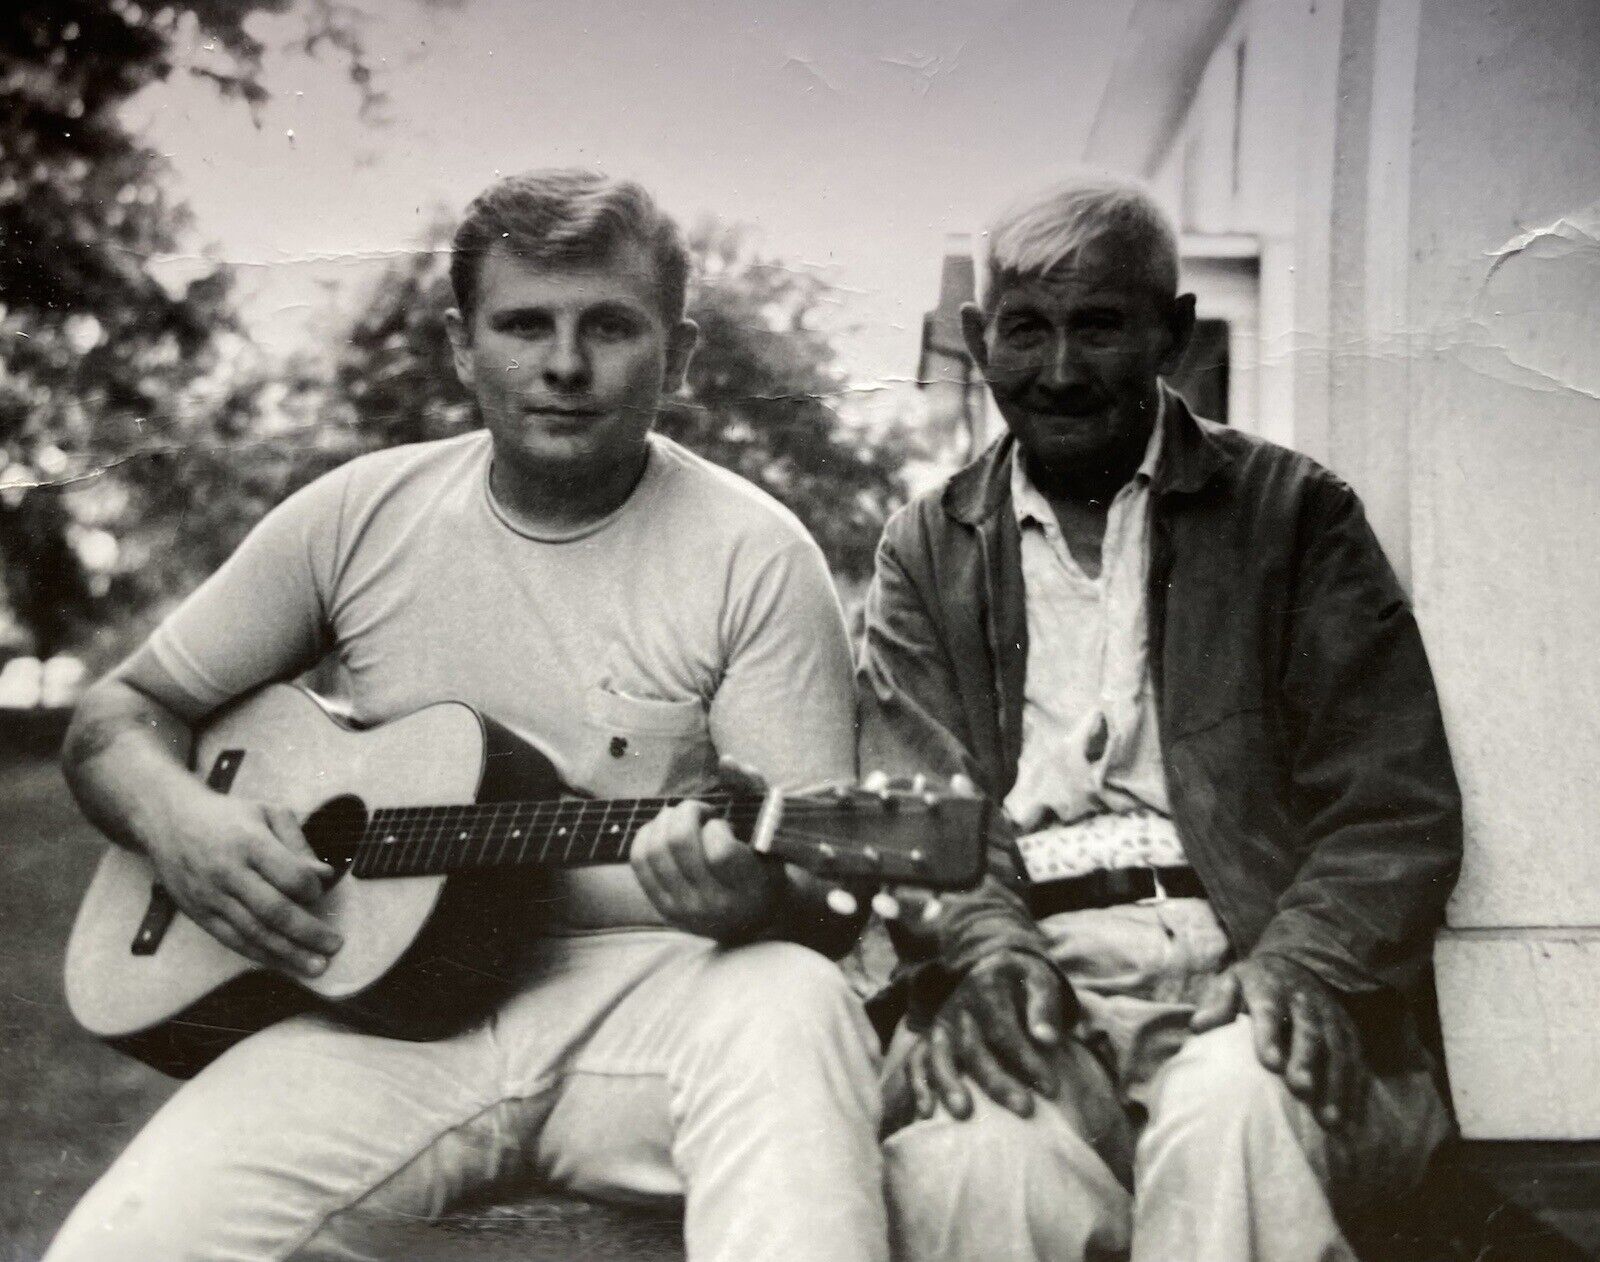 Guy Playing Guitar with Older Man Next to Him Original Vintage Photo